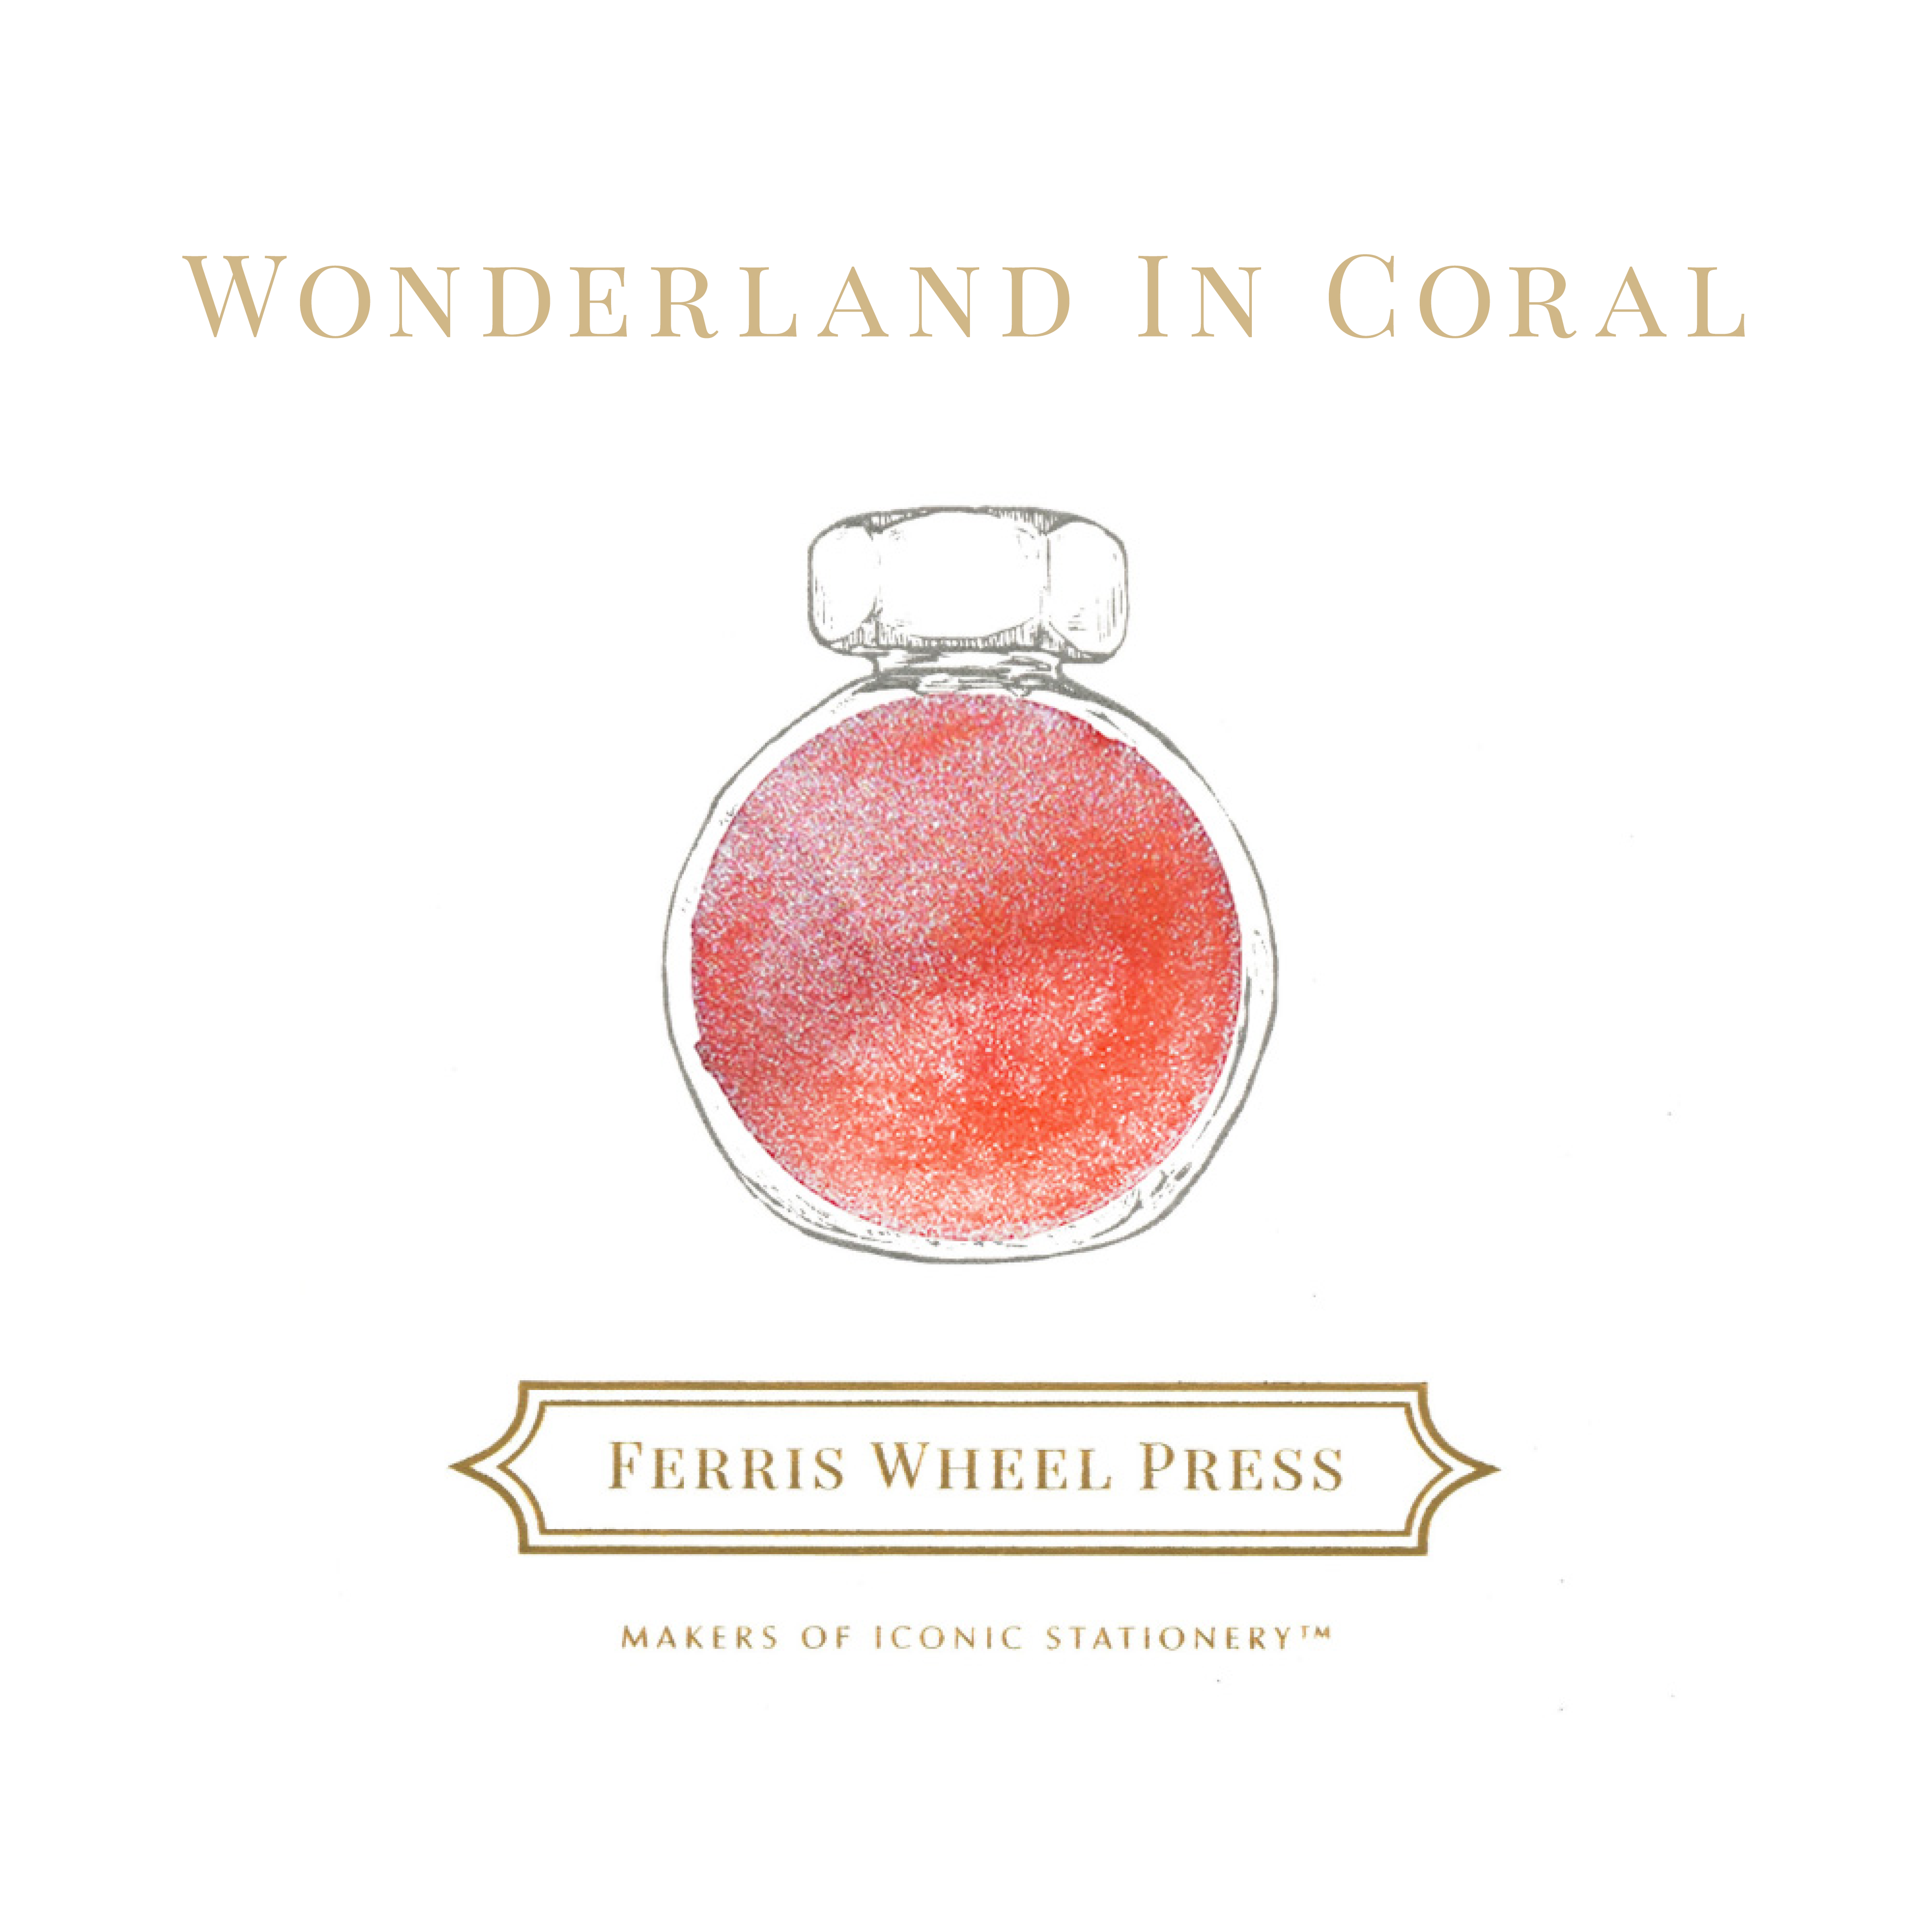 38 ml vulpeninkt - Wonderland in koraal